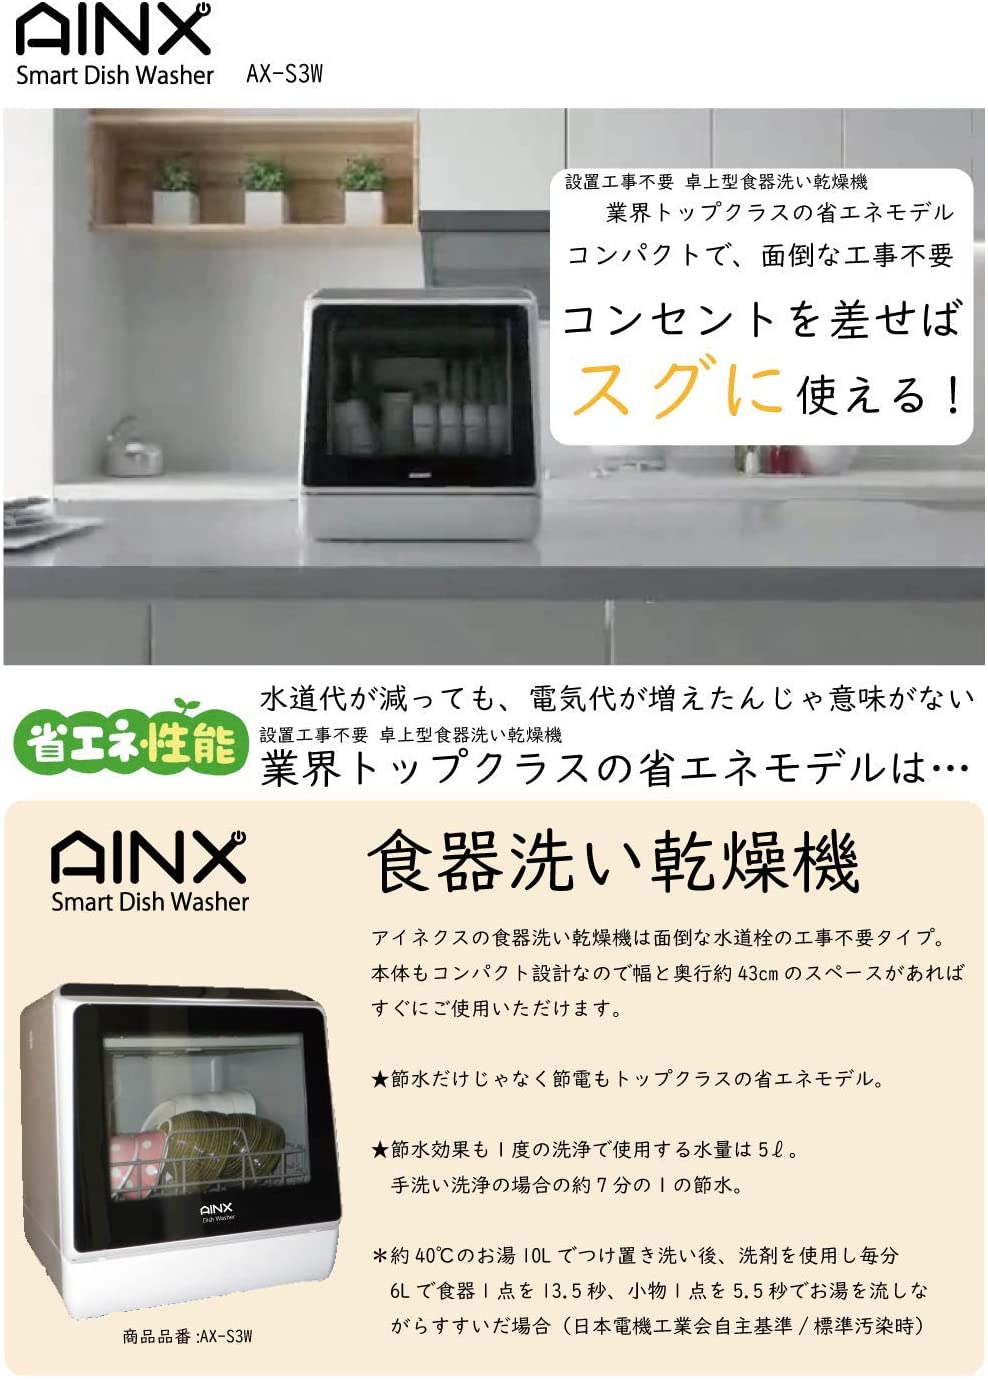 【送料無料】食器洗い乾燥機 AX-S3 AINX